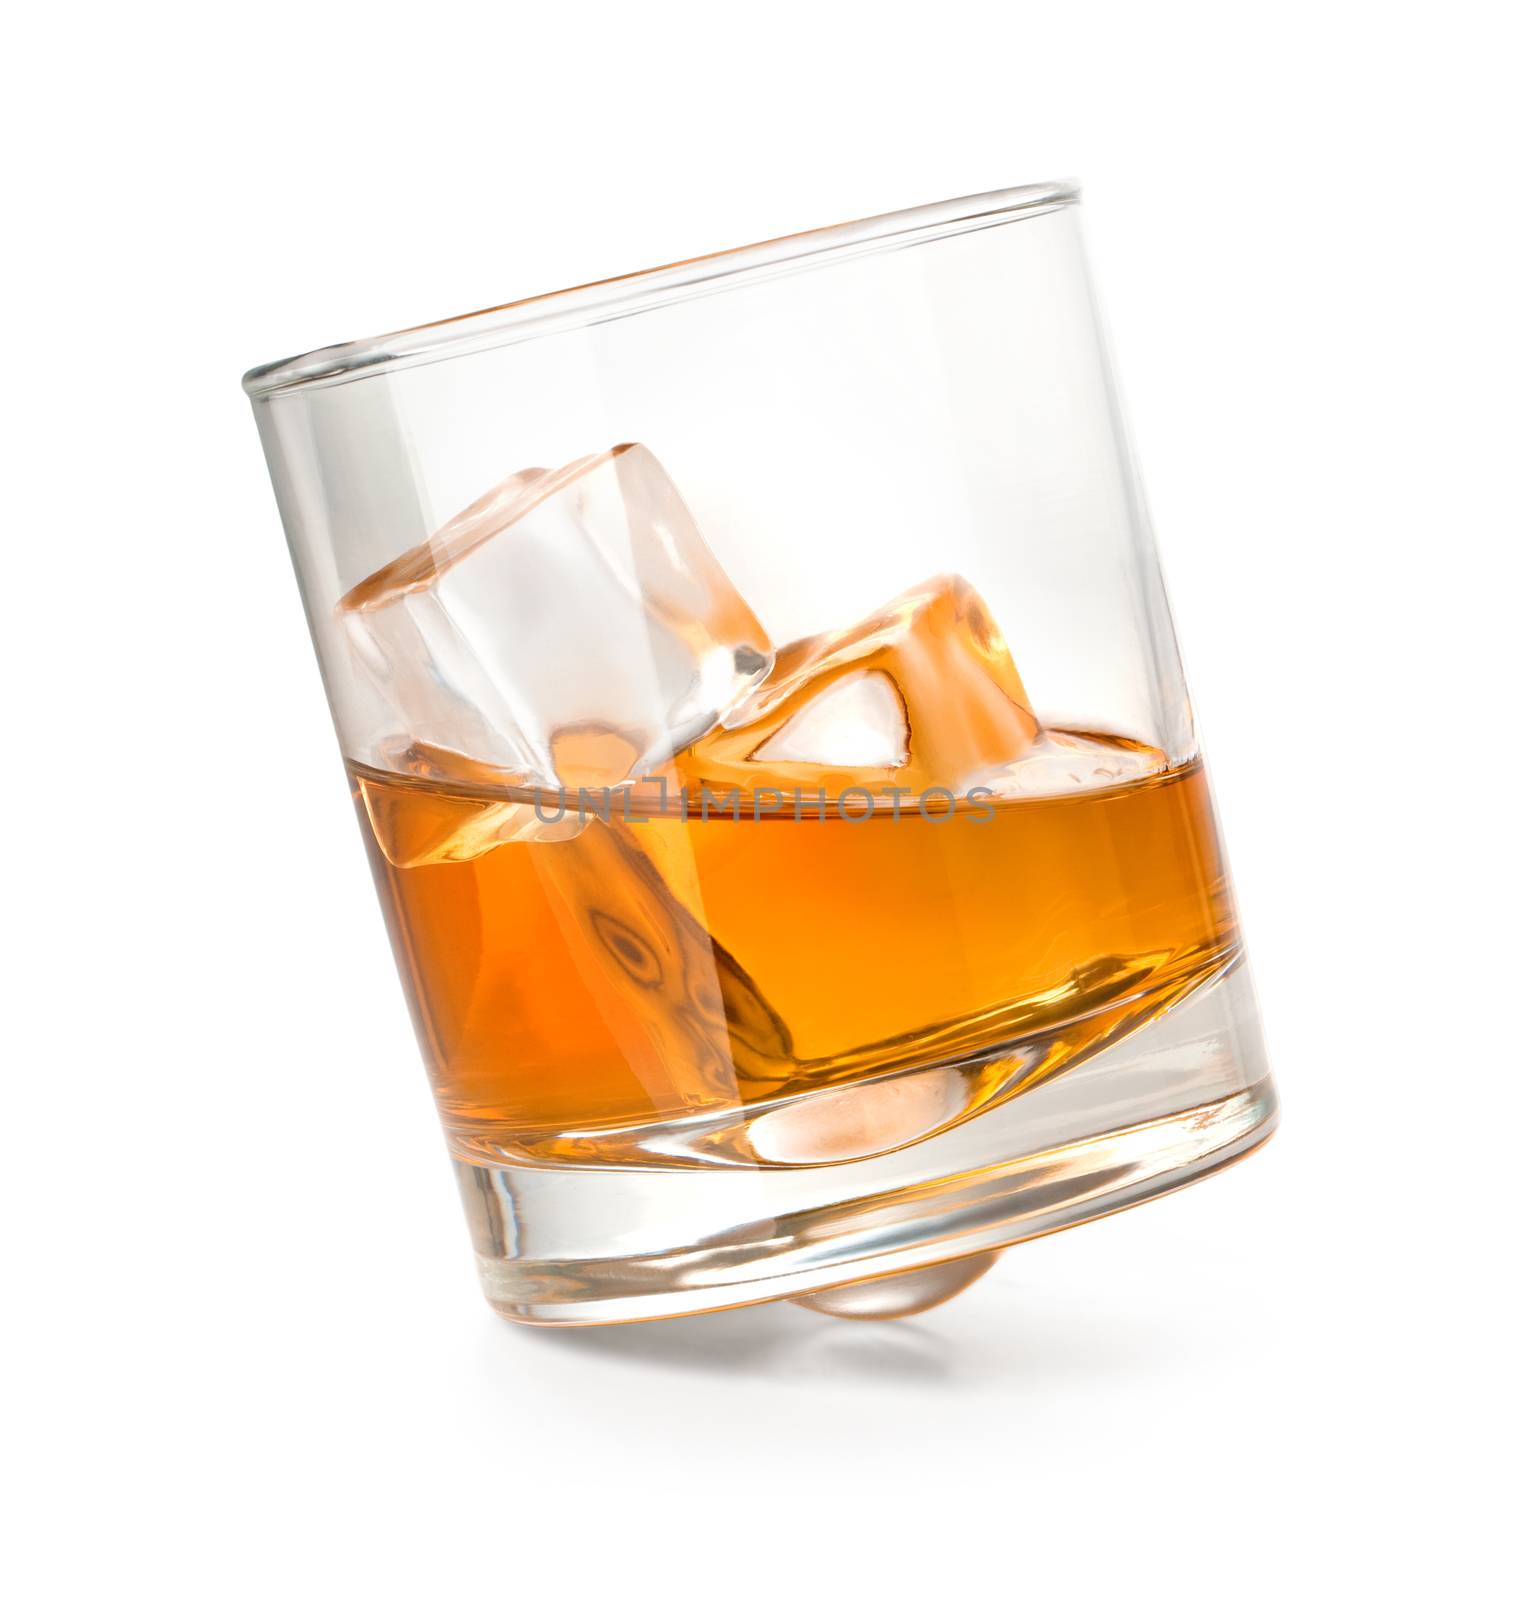 whiskey glass by kornienko